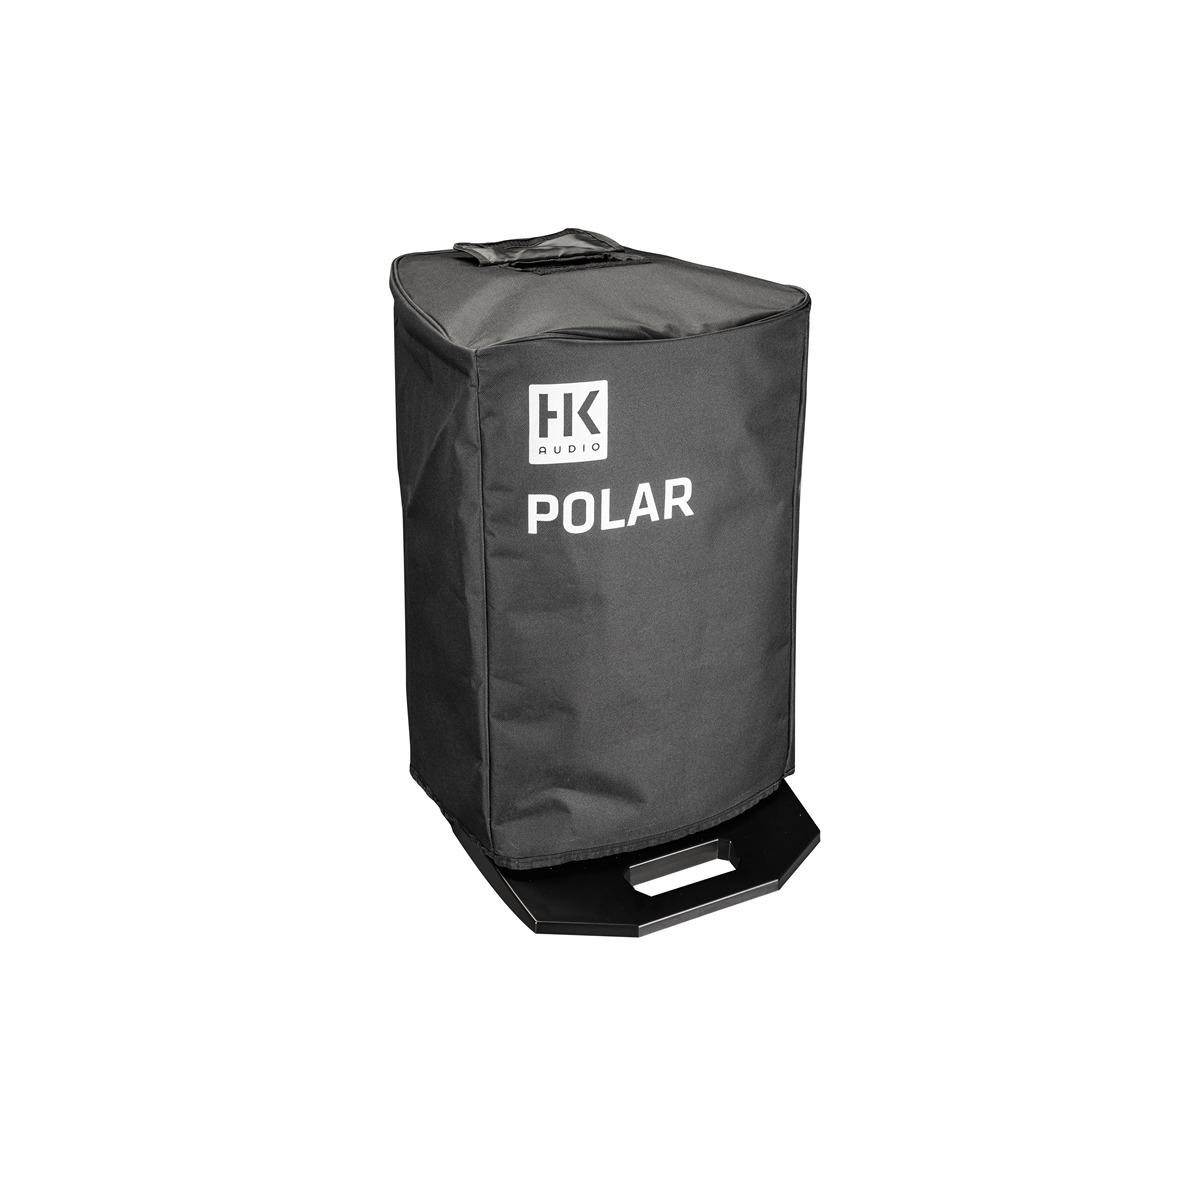 HK POLAR 12 sistema audio 2000w